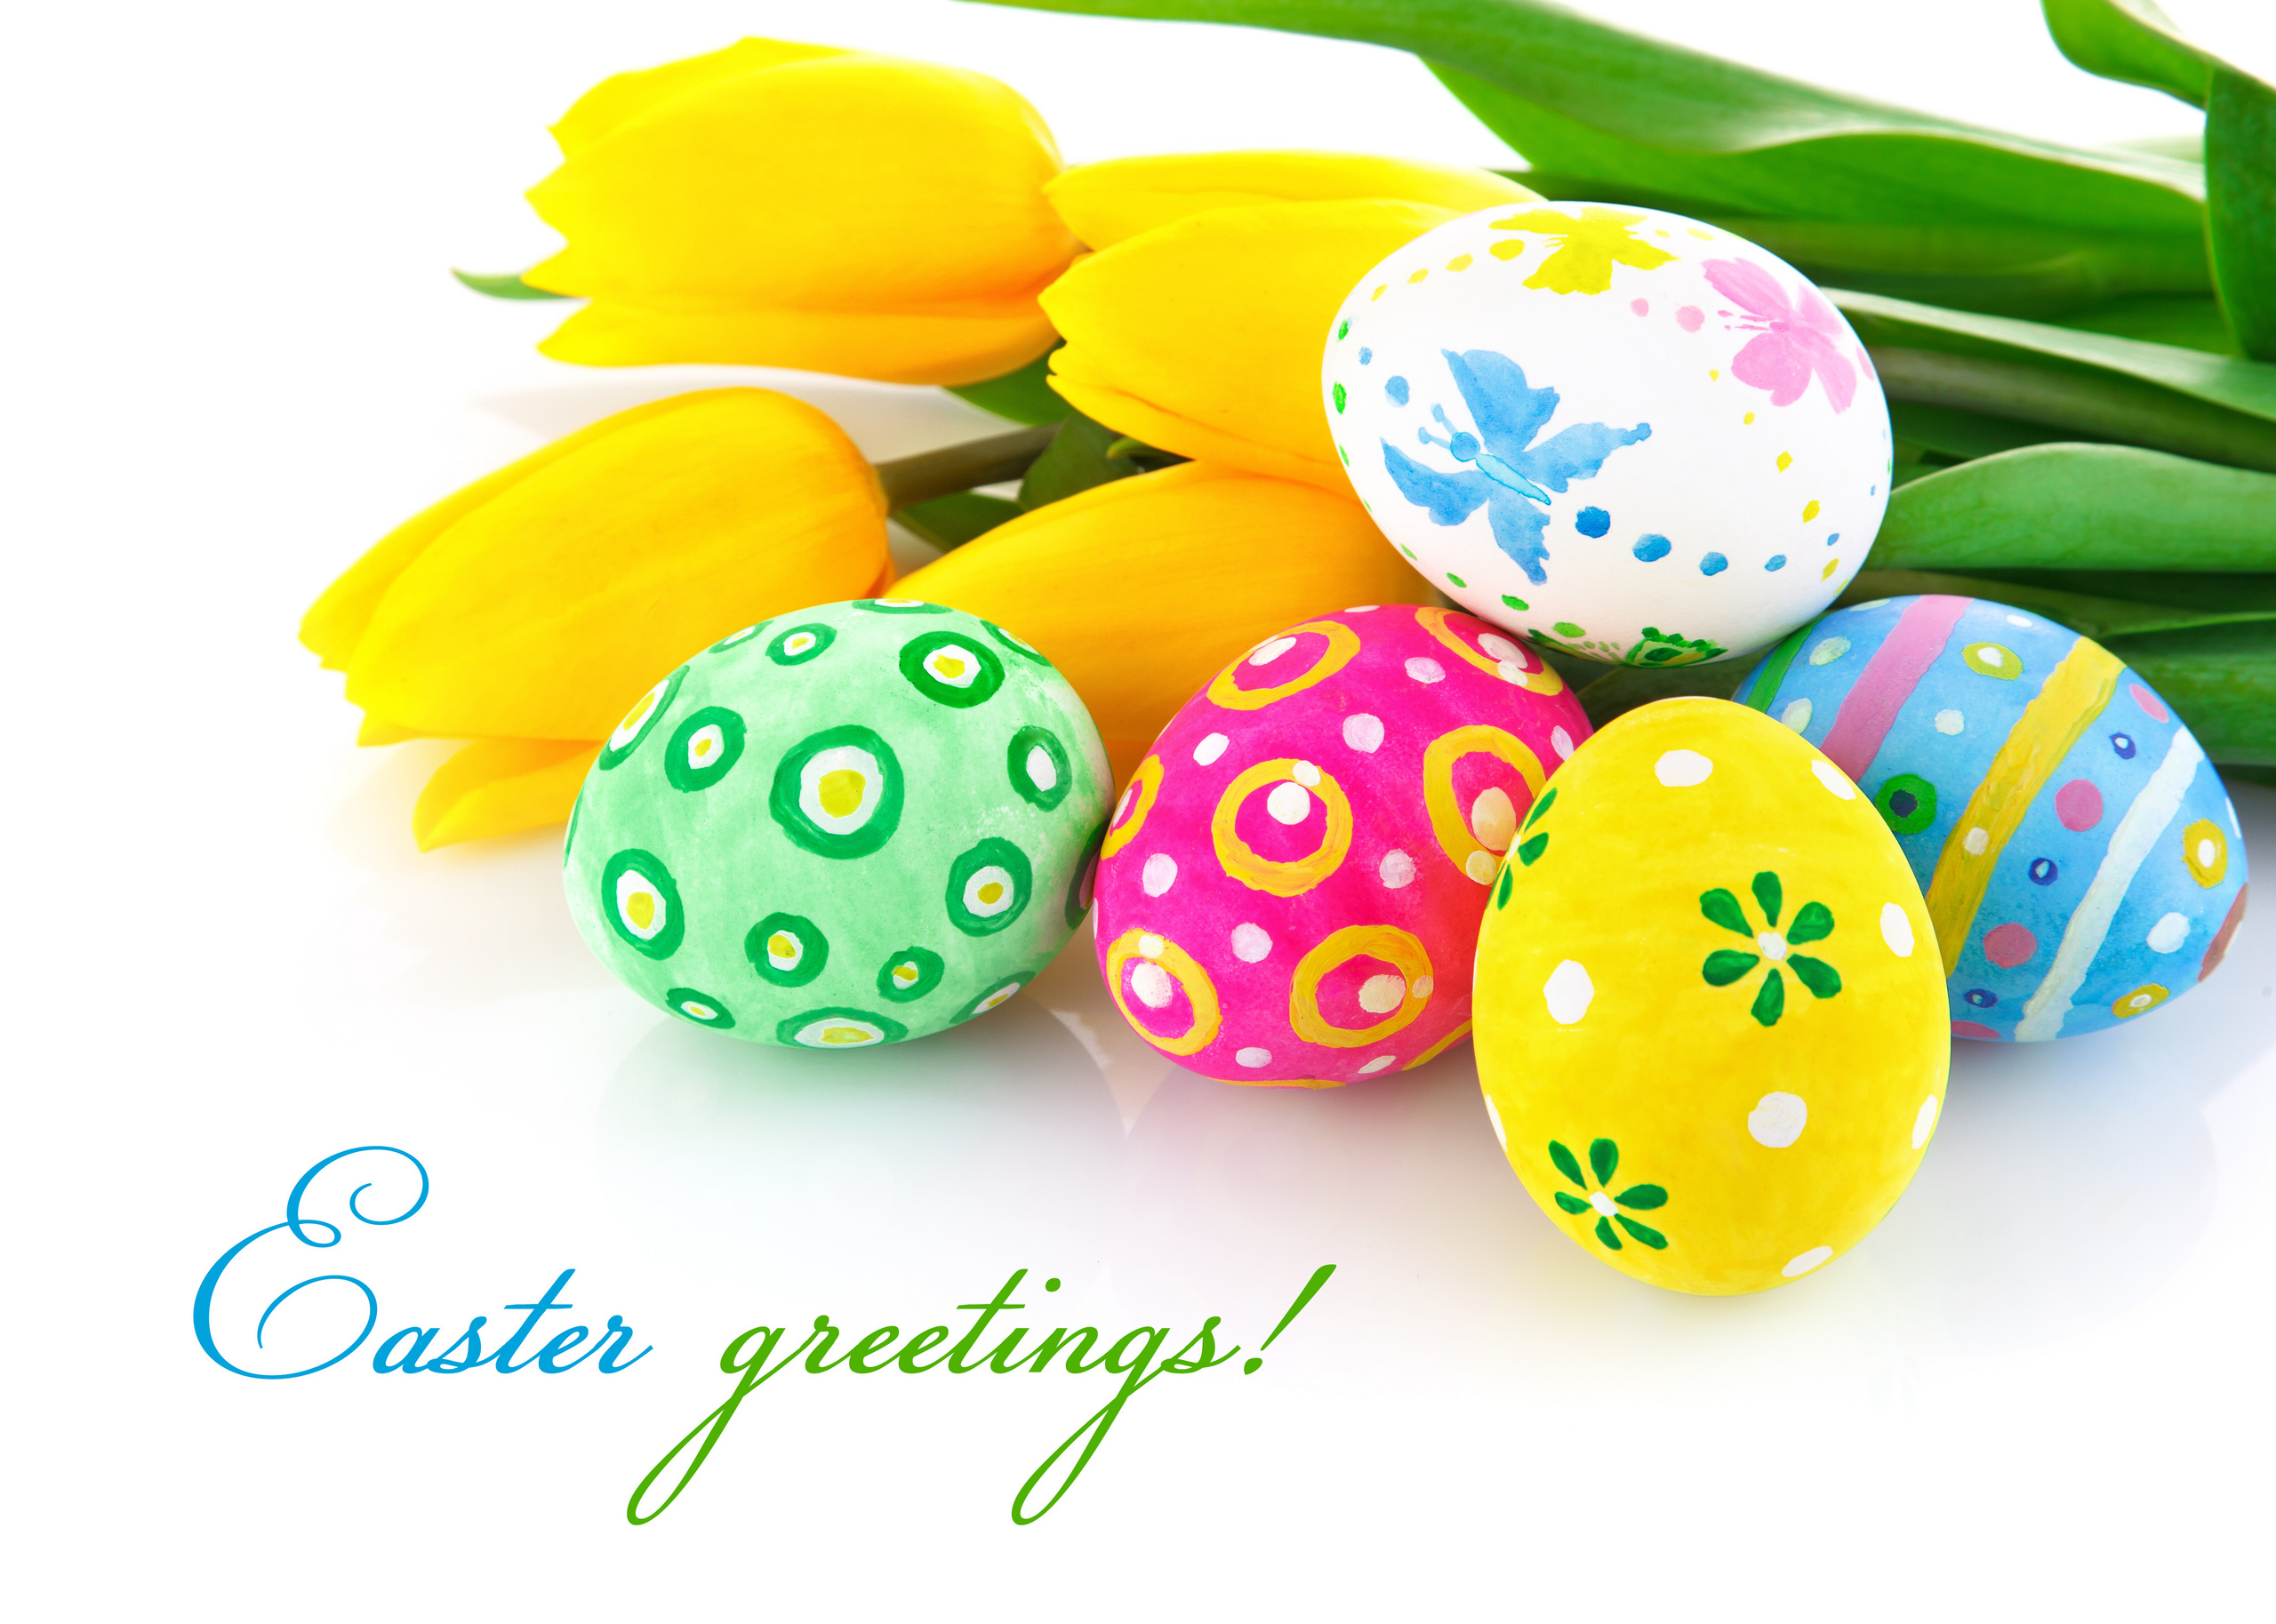 Happy Easter Greetings HD Wallpaper